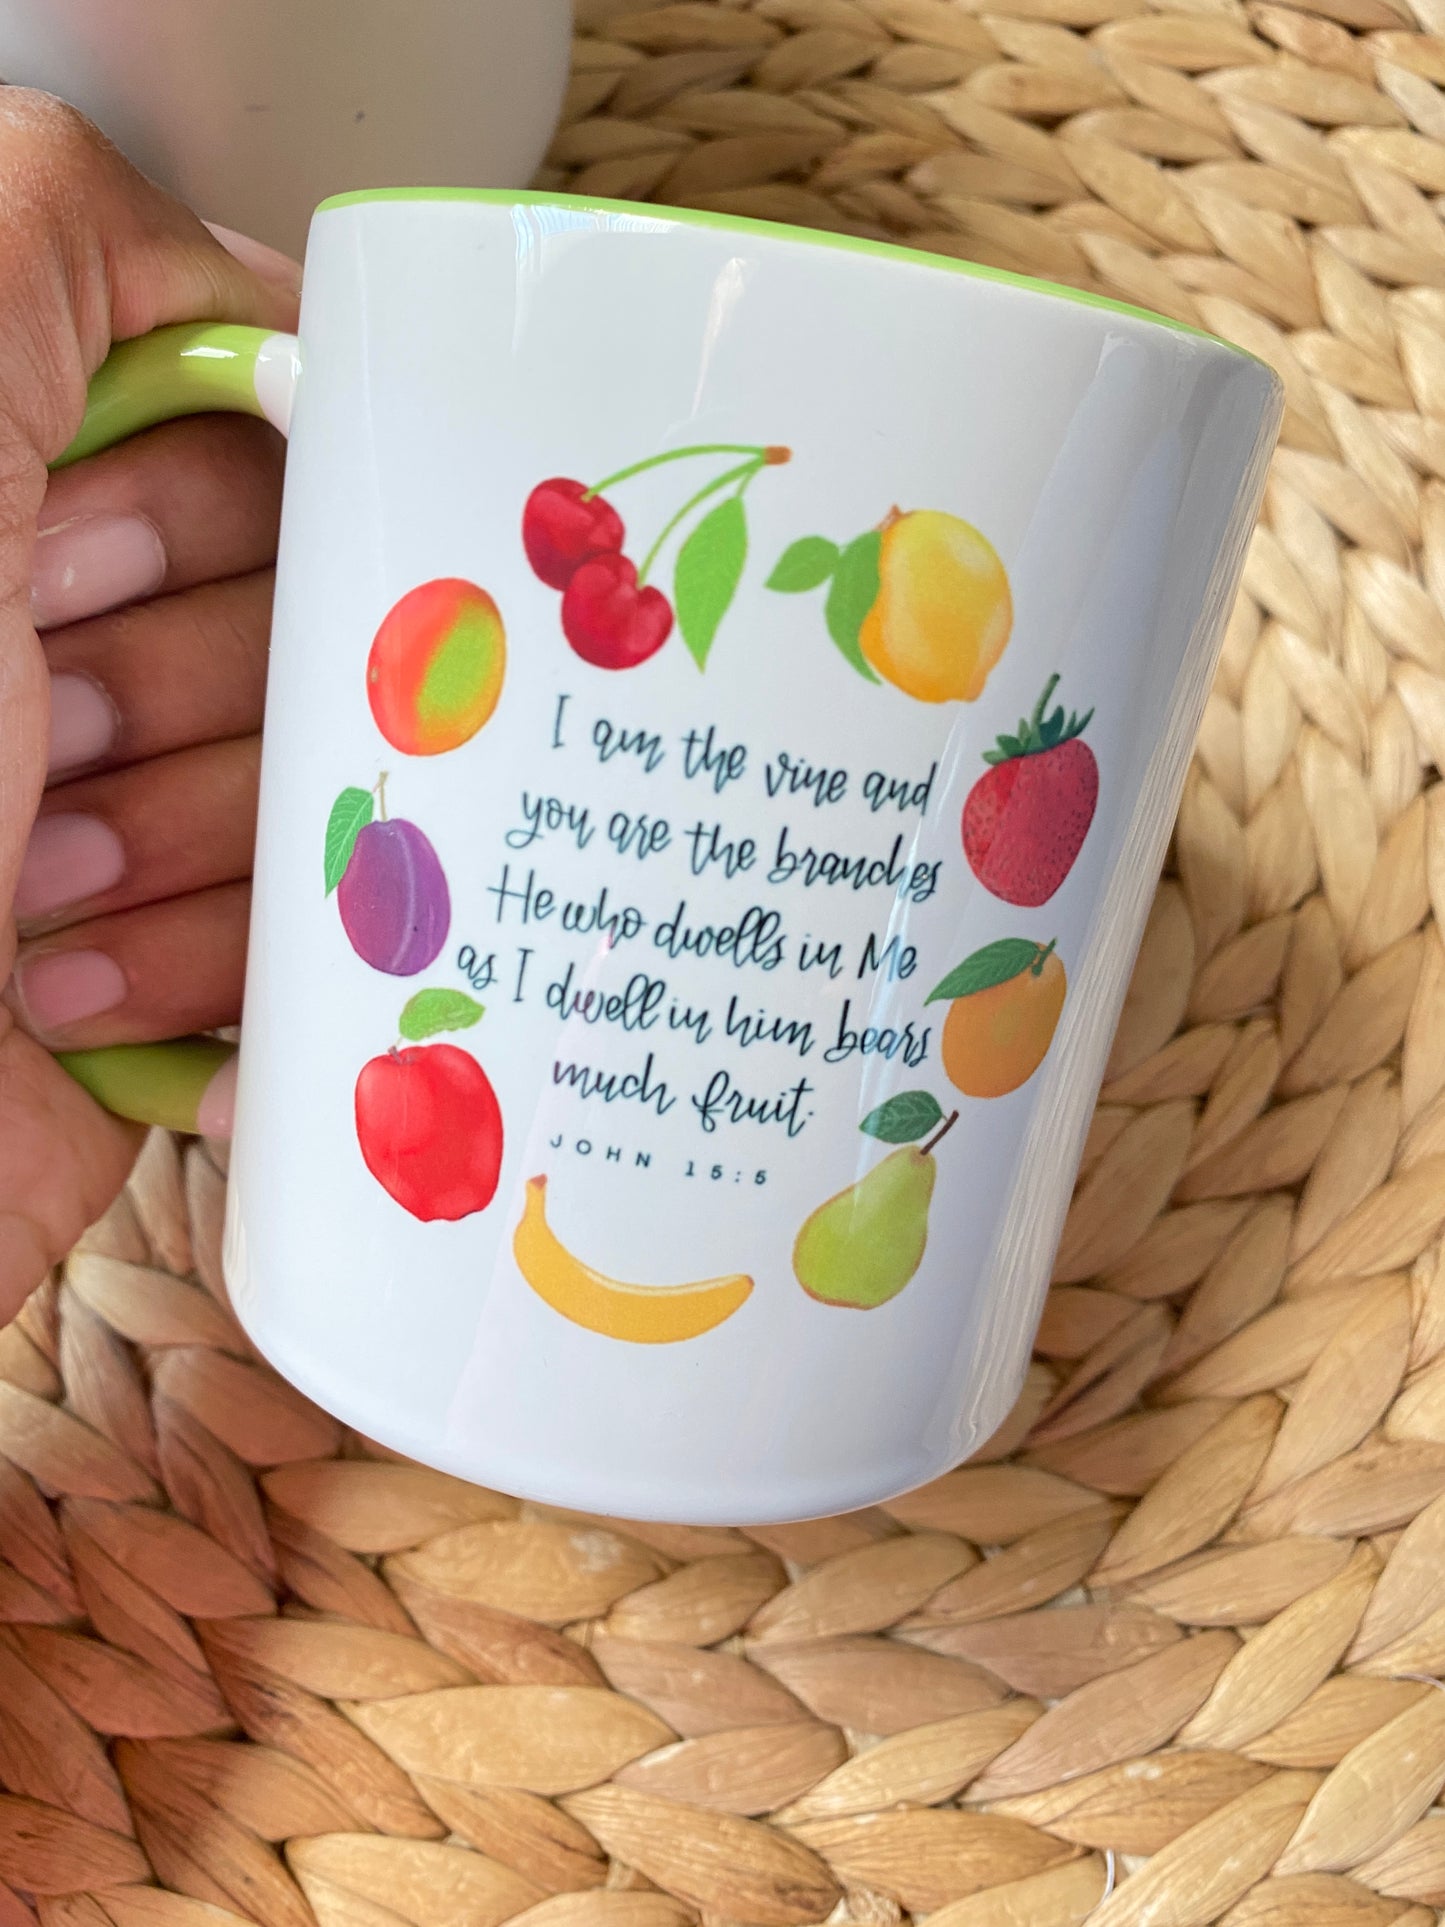 I am the vine - John 15:5 Christian Mug